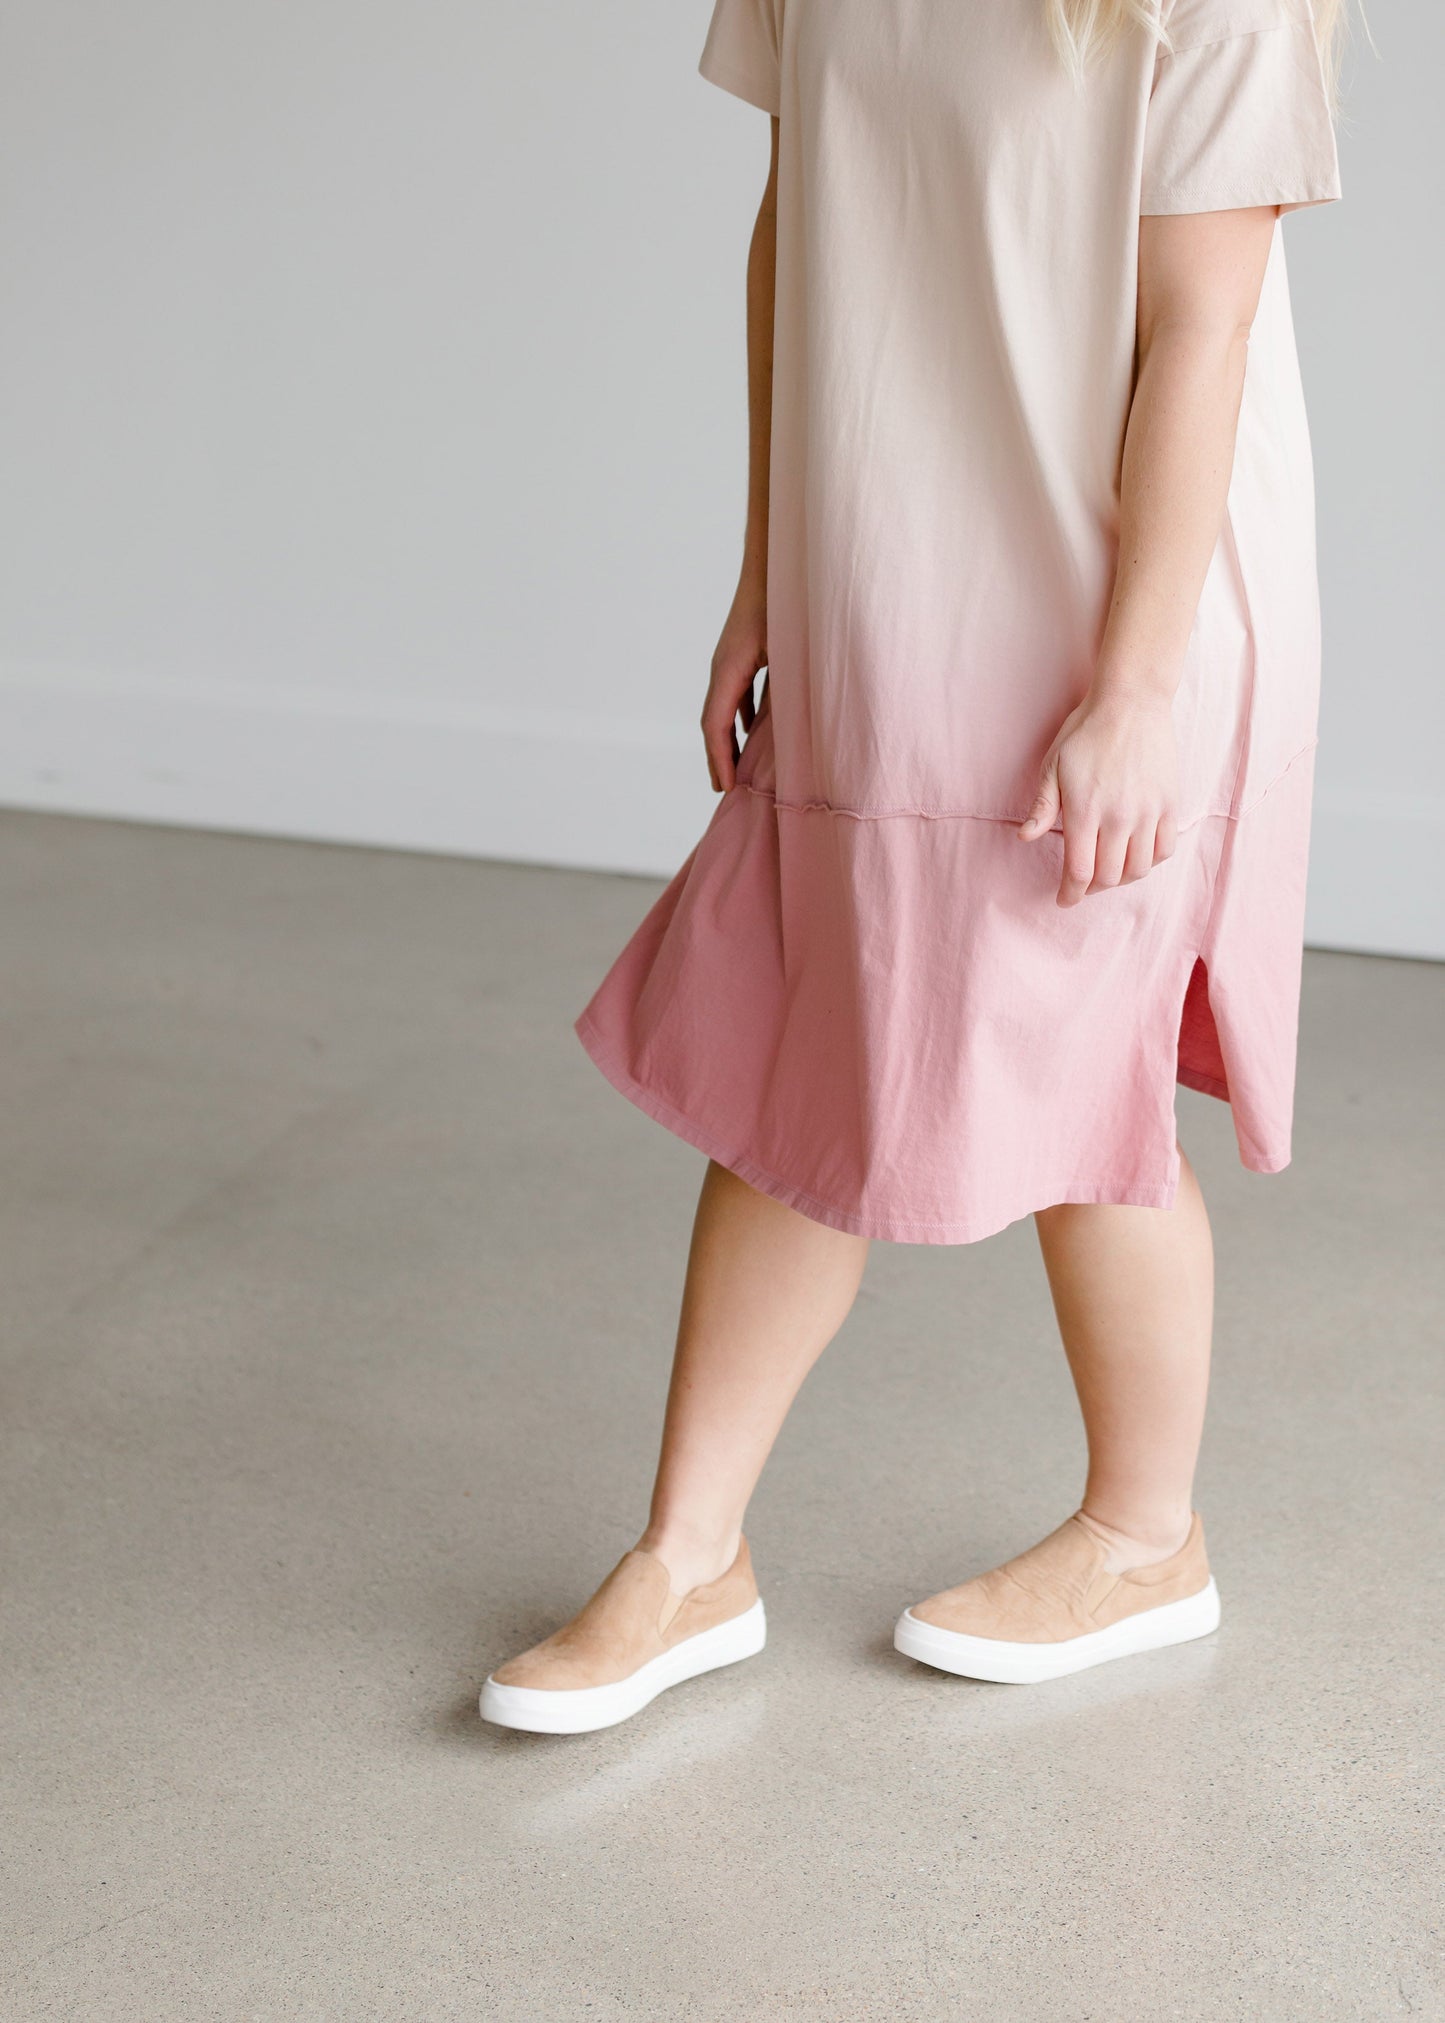 Short Sleeve Dip Dye Pink Midi Dress - FINAL SALE Dresses